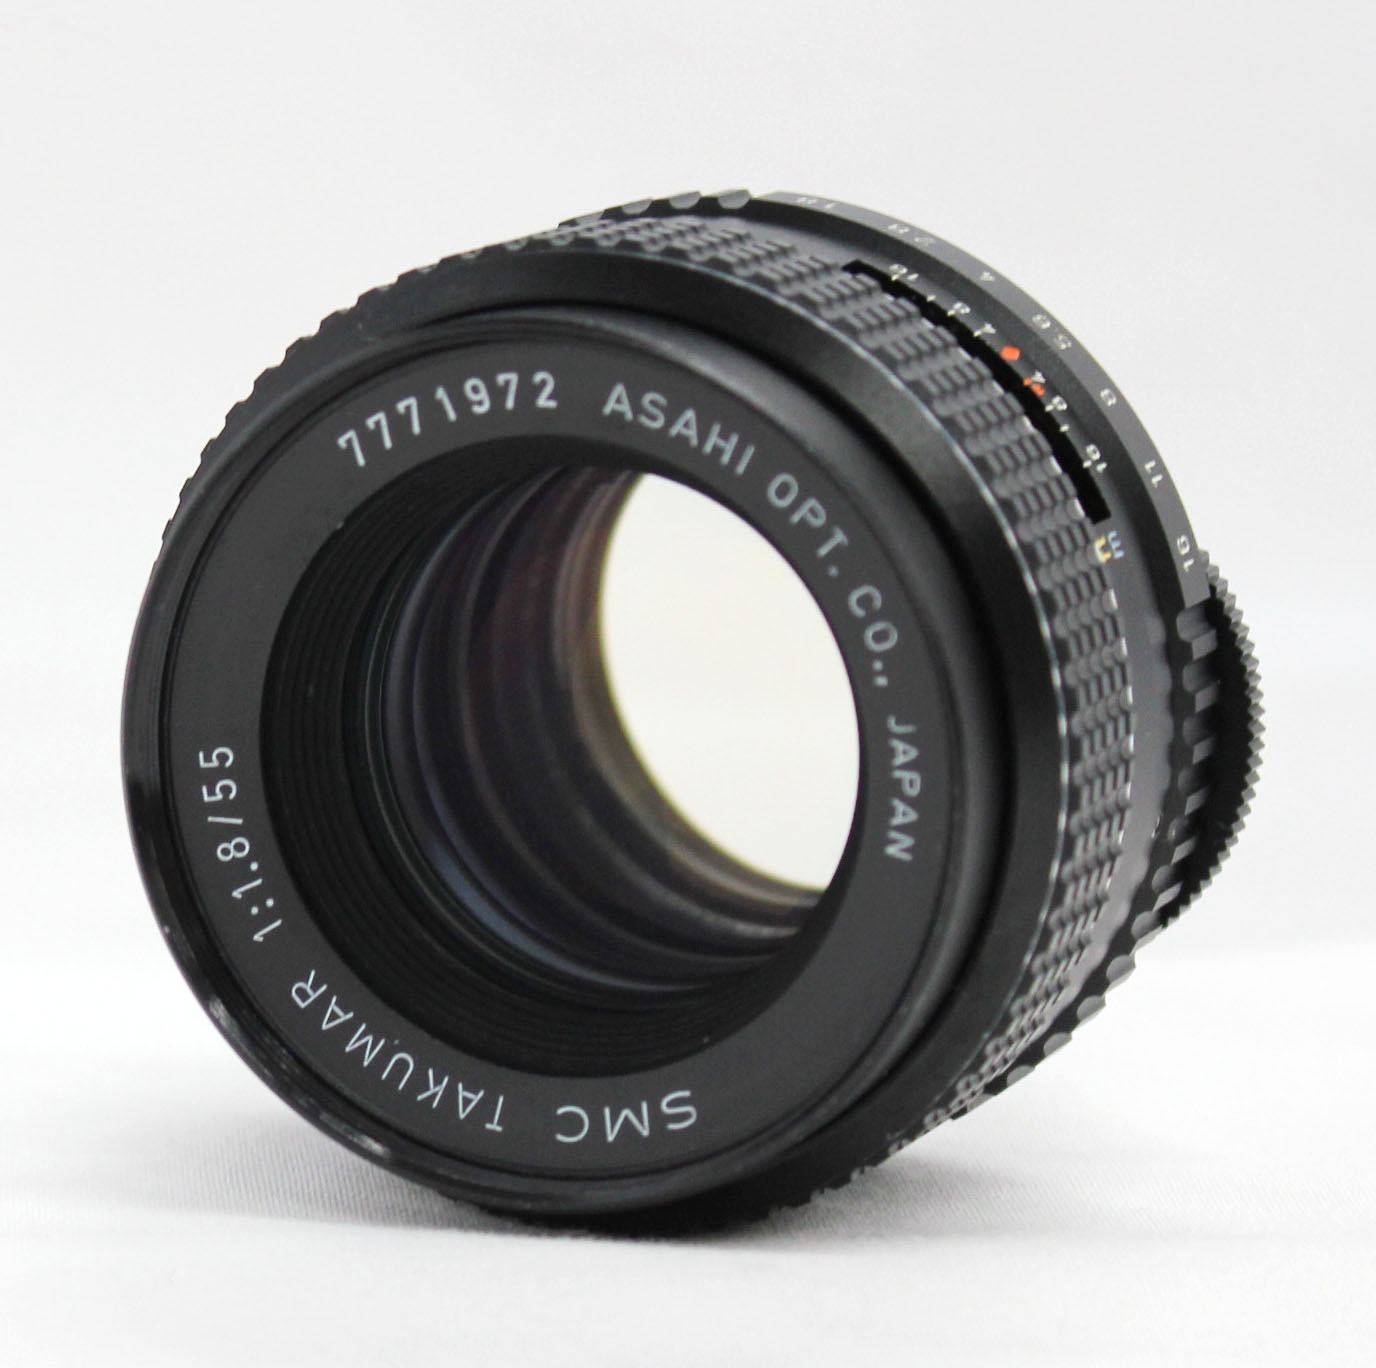 Asahi Pentax Spotmatic F SPF 35mm SLR Camera w/ SMC Takumar 55mm F/1.8 Lens from Japan Photo 11